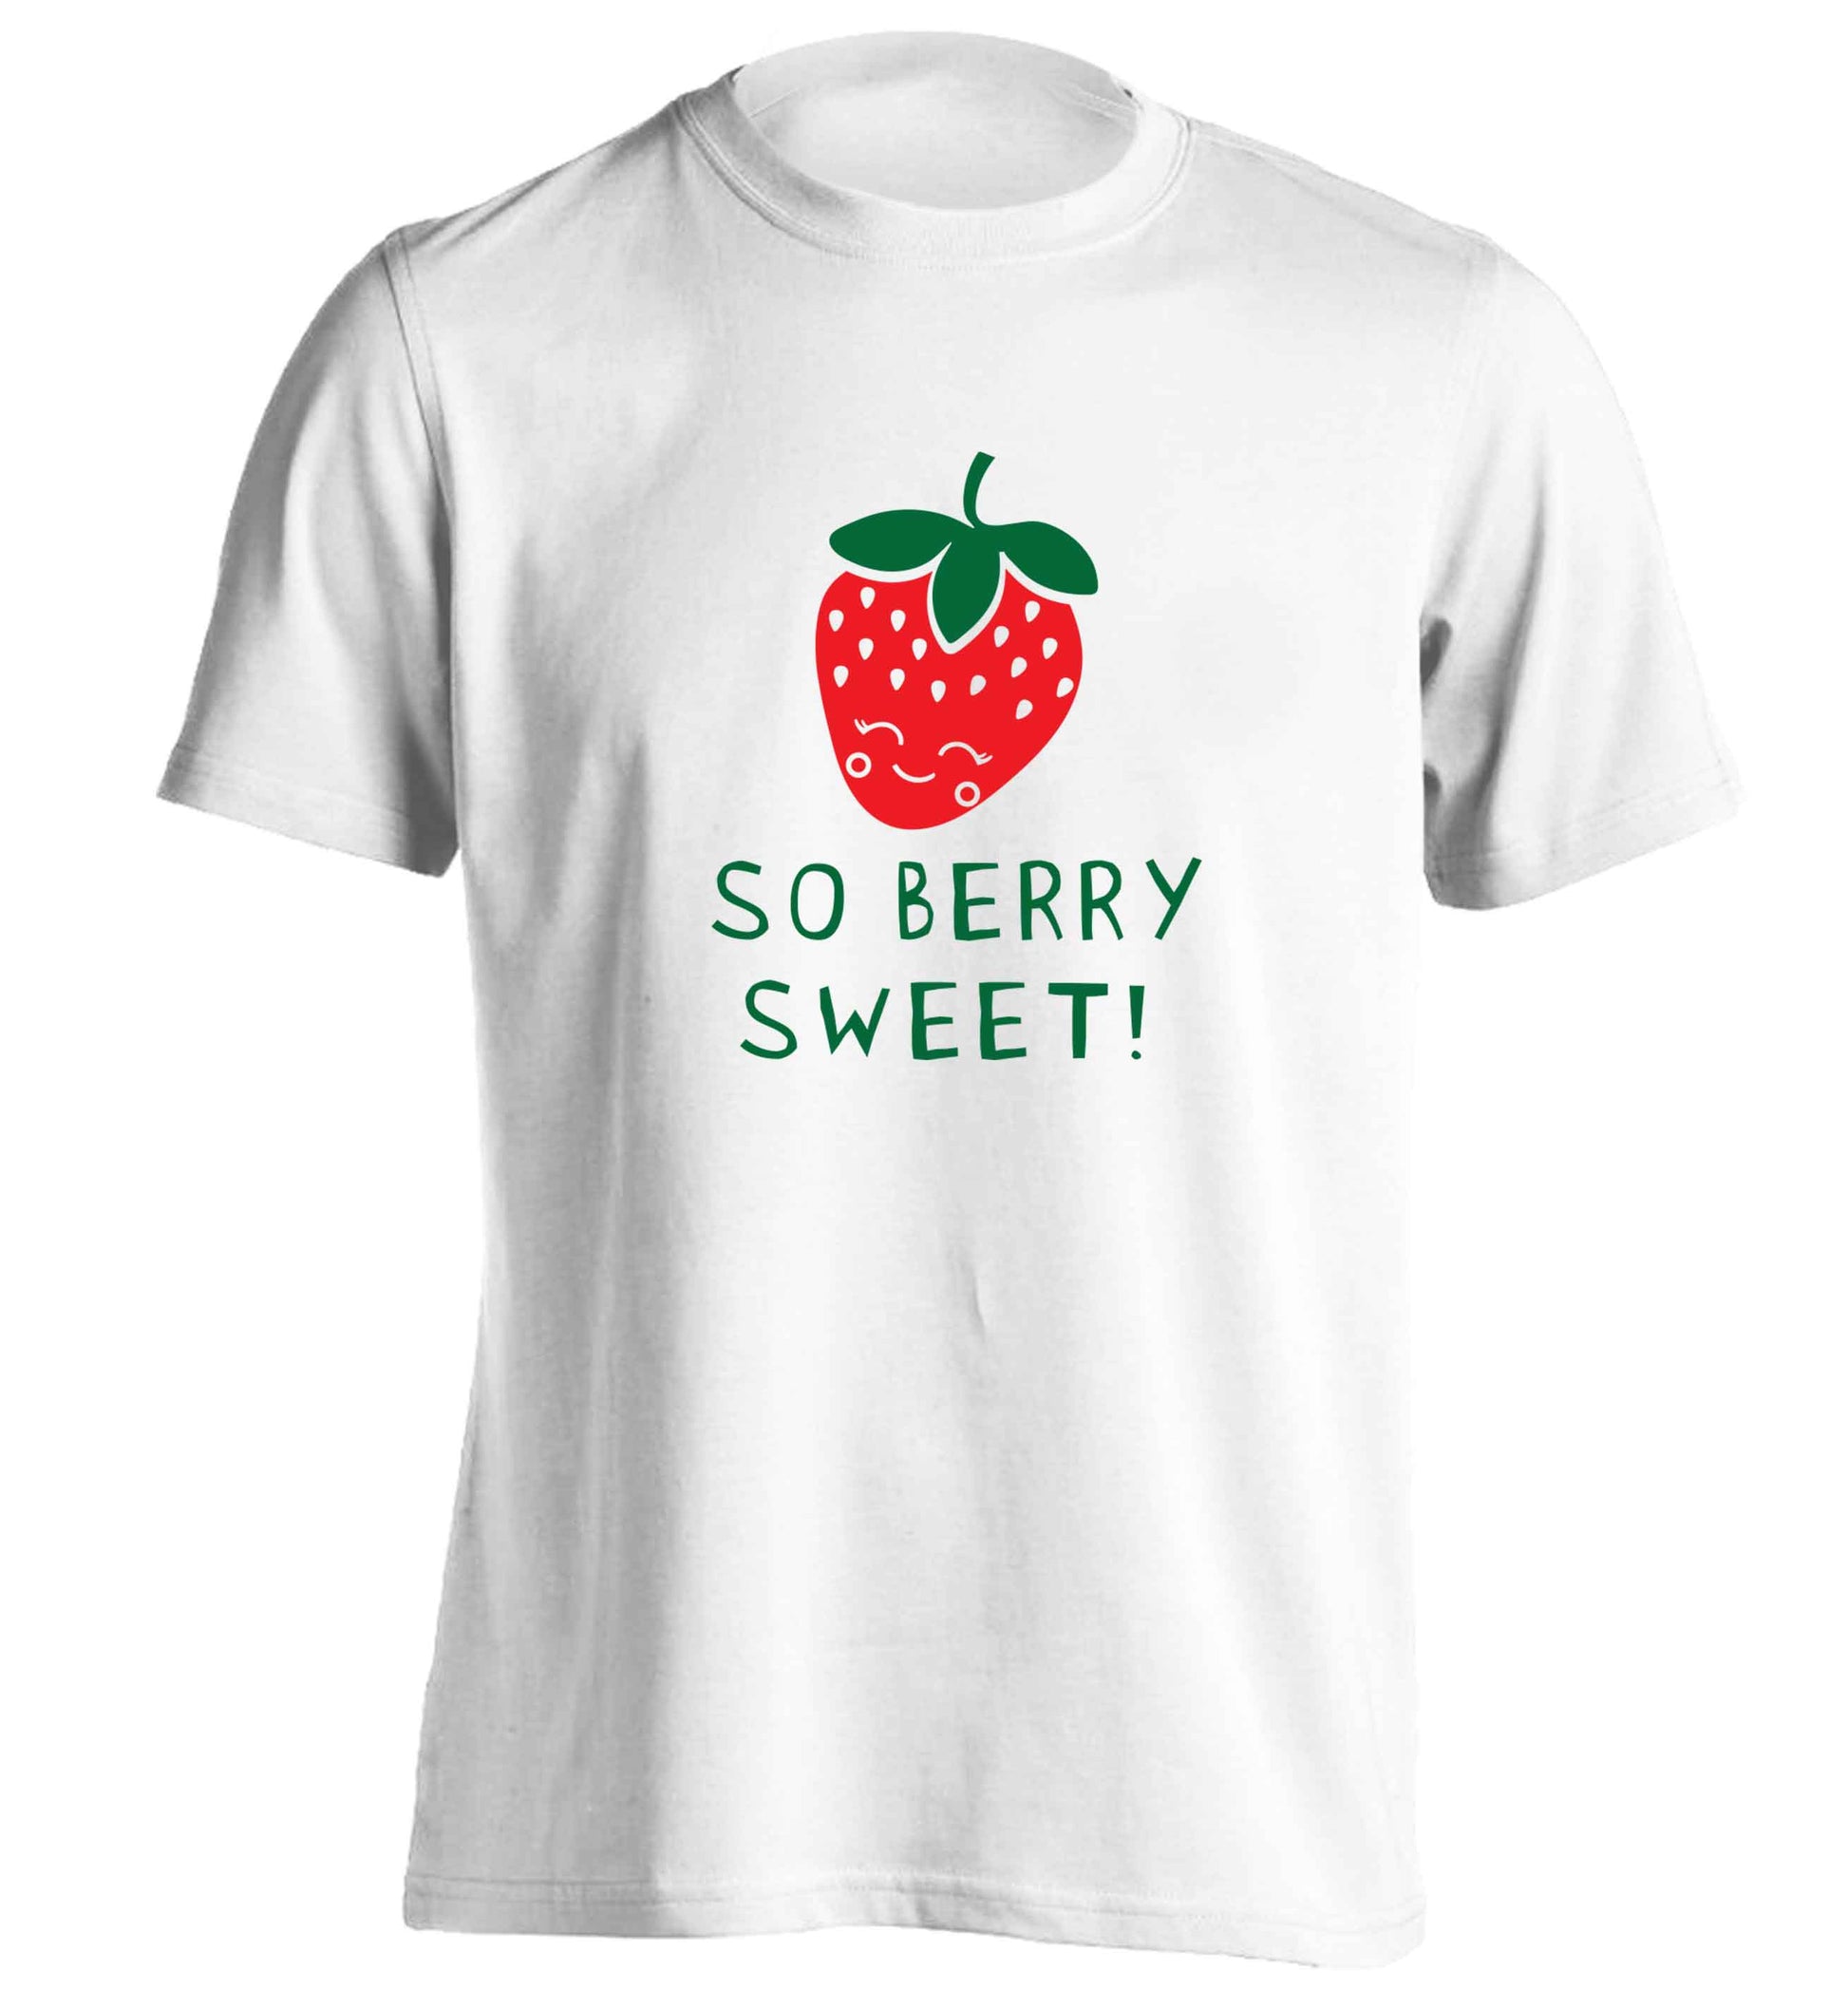 So berry sweet adults unisex white Tshirt 2XL